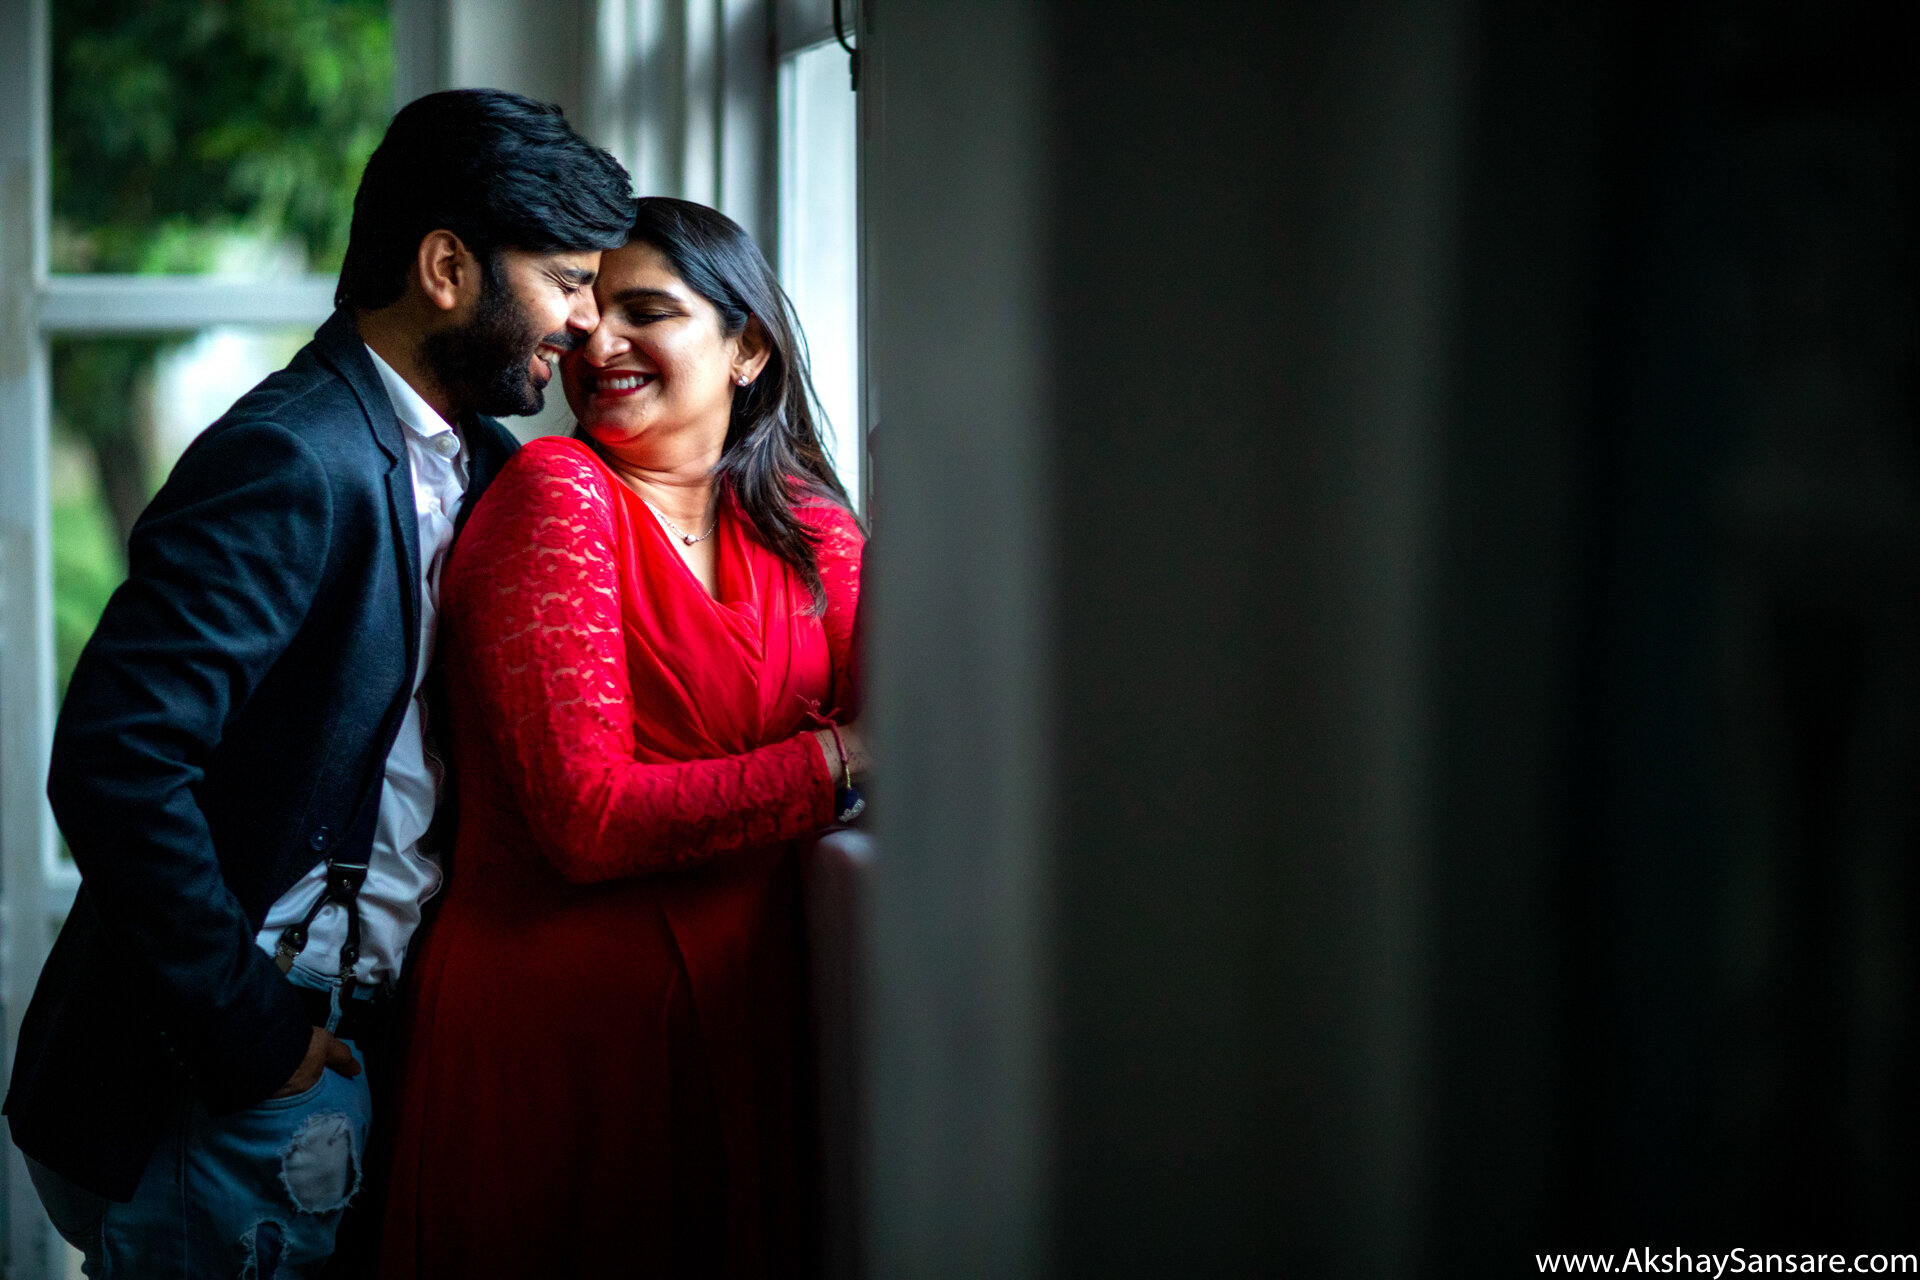 Anuj x Malvika + 1 Akshay Sansare Photography & Films Candid Photographer Best in mumbai Cinematic wedding films-3.jpg